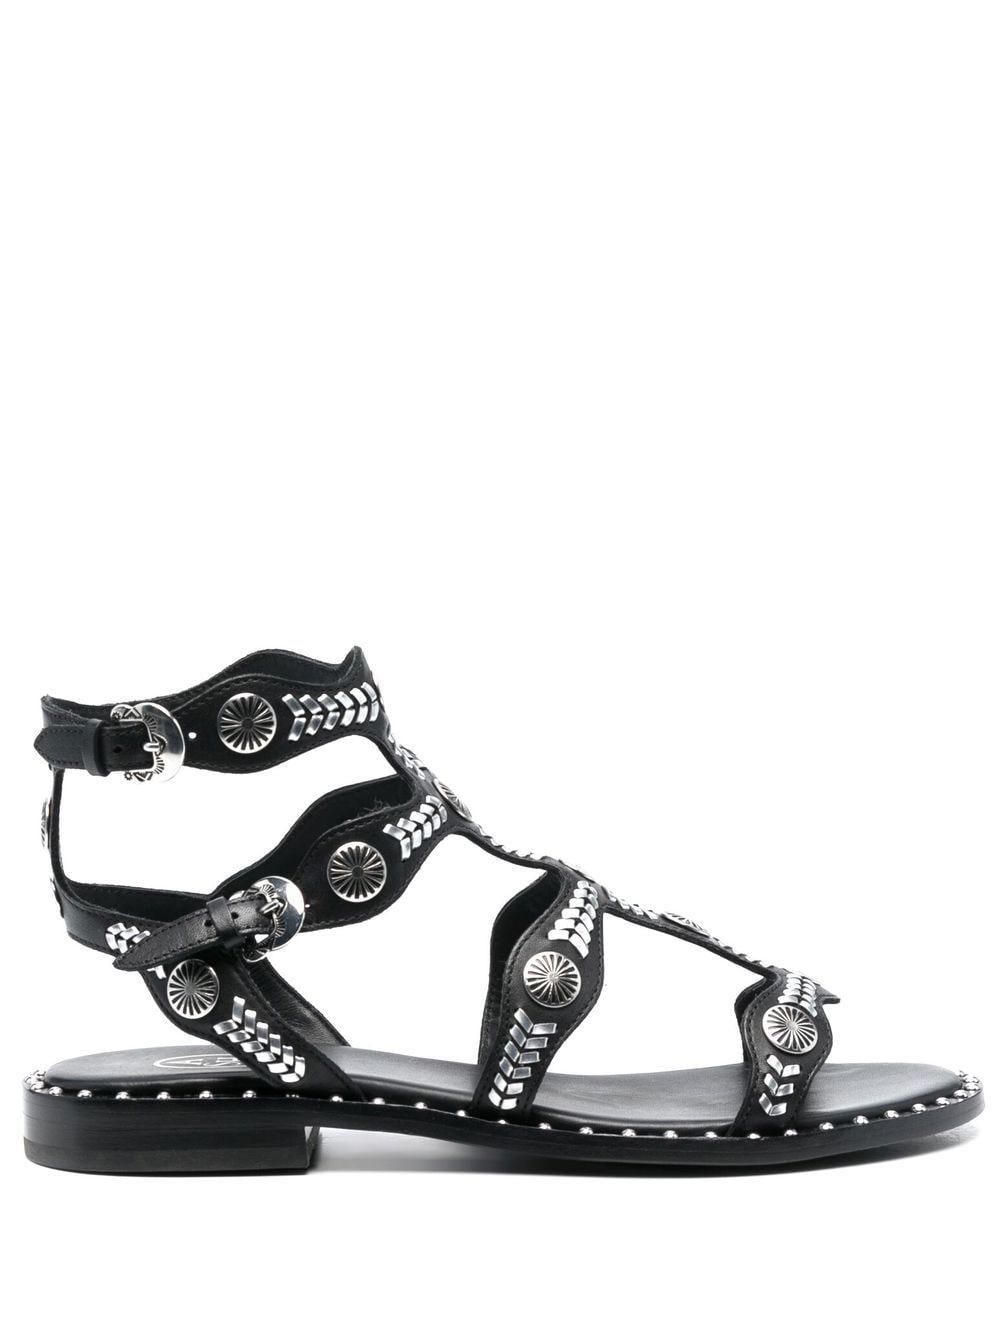 Ash Pacha Stud-embellished Sandals in Black | Lyst